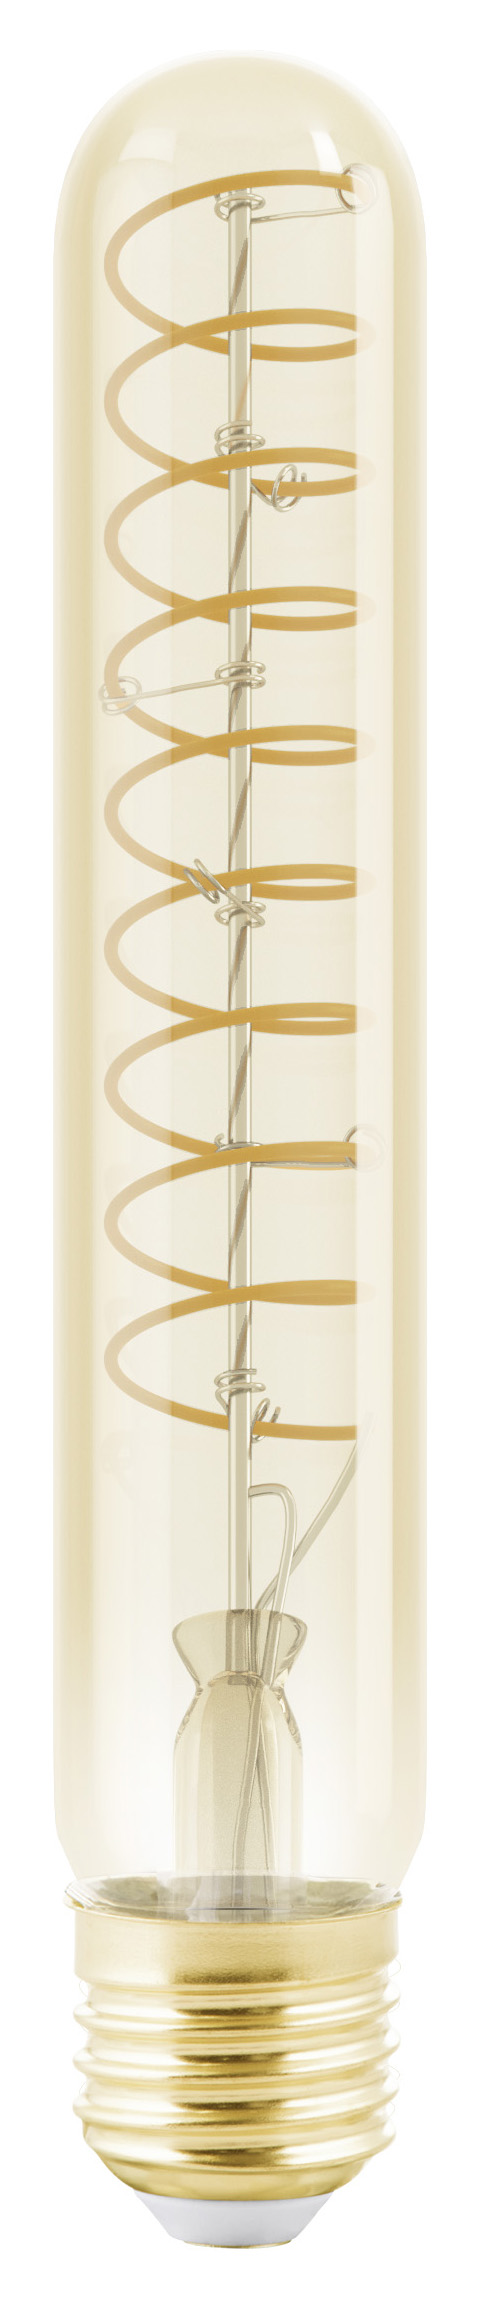 Image of Eglo LED Dimmable Tube Twisted Filament E27 Amber Light Bulb - 4W